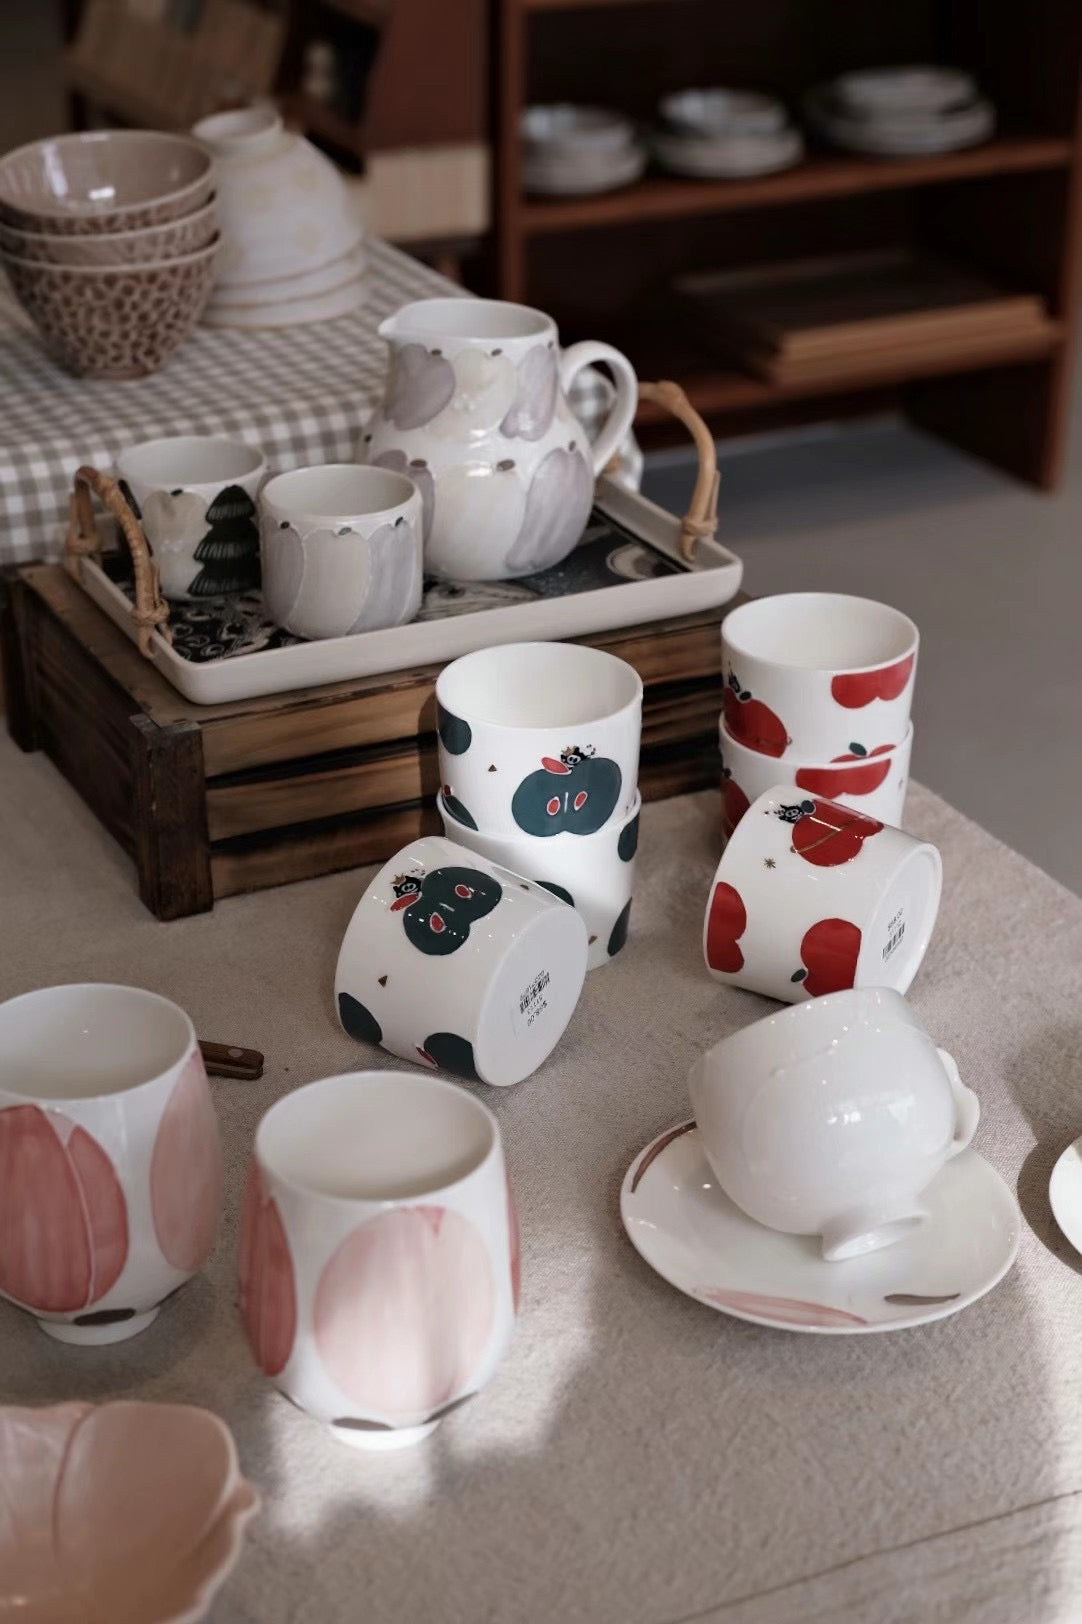 YINI Handmade Apple Collection- Tea cup